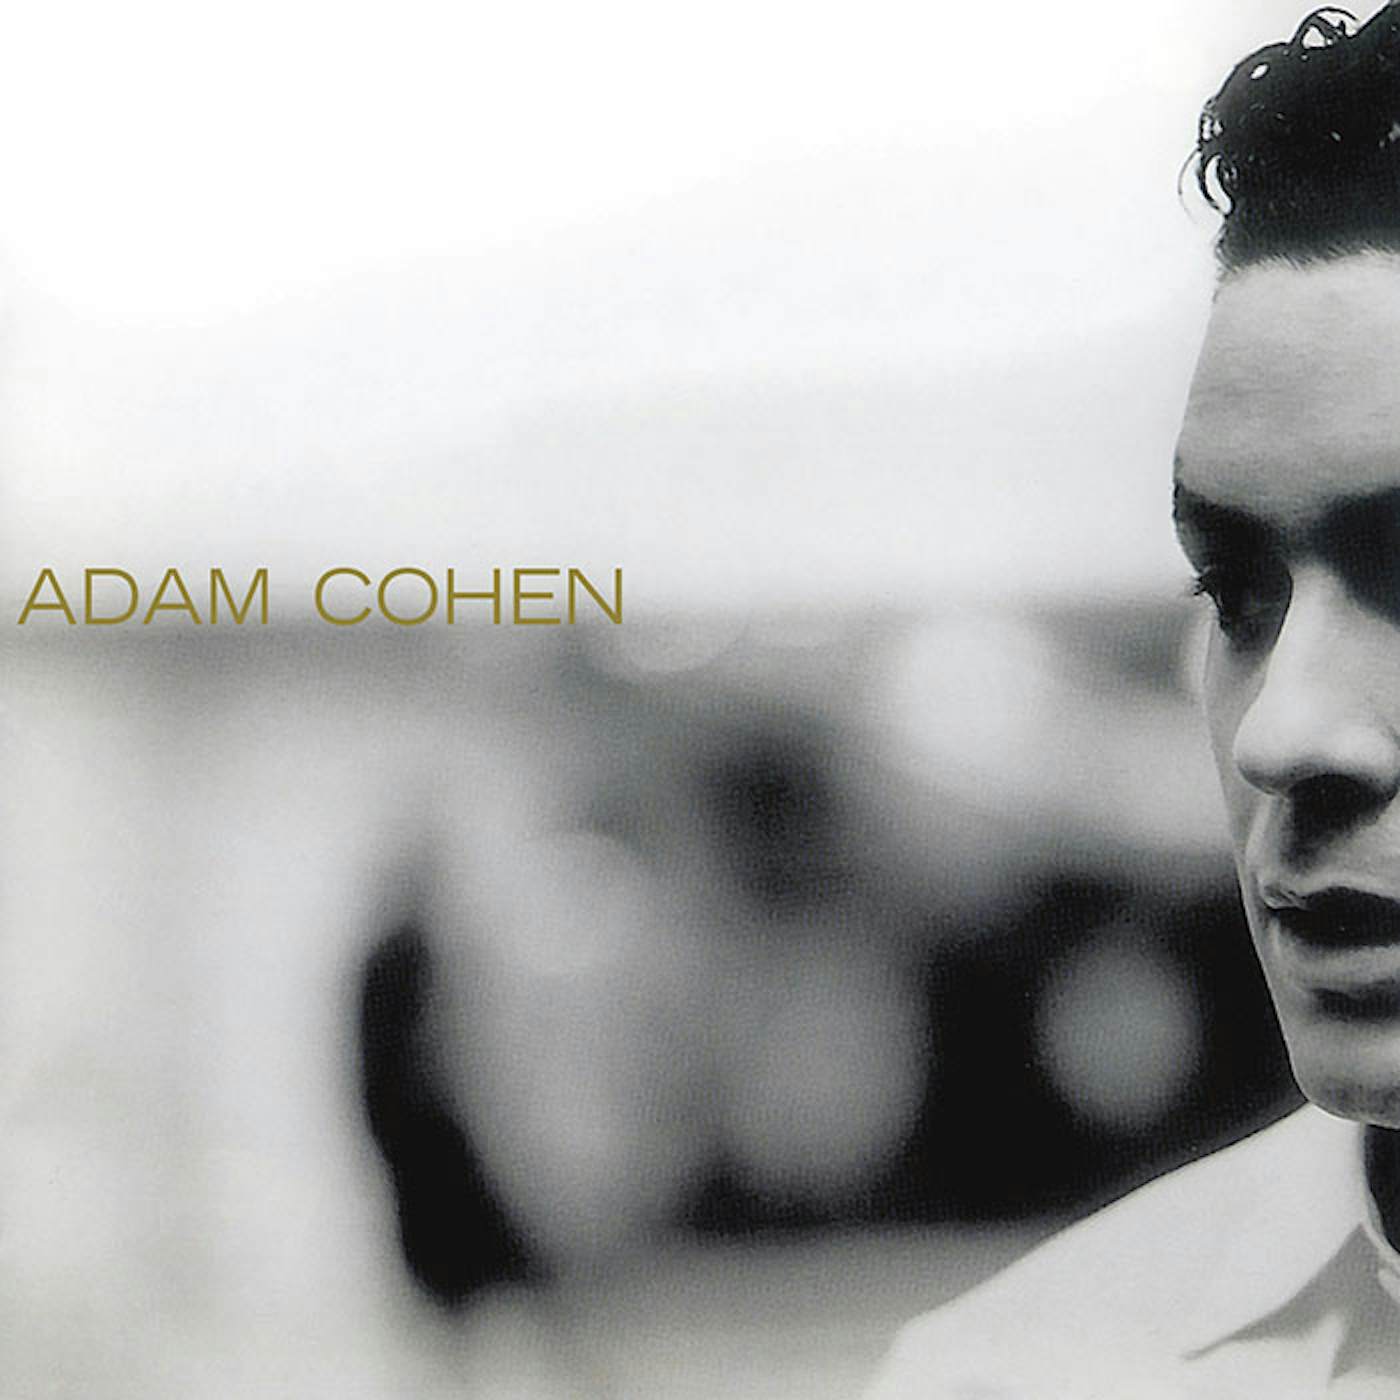 ADAM COHEN CD